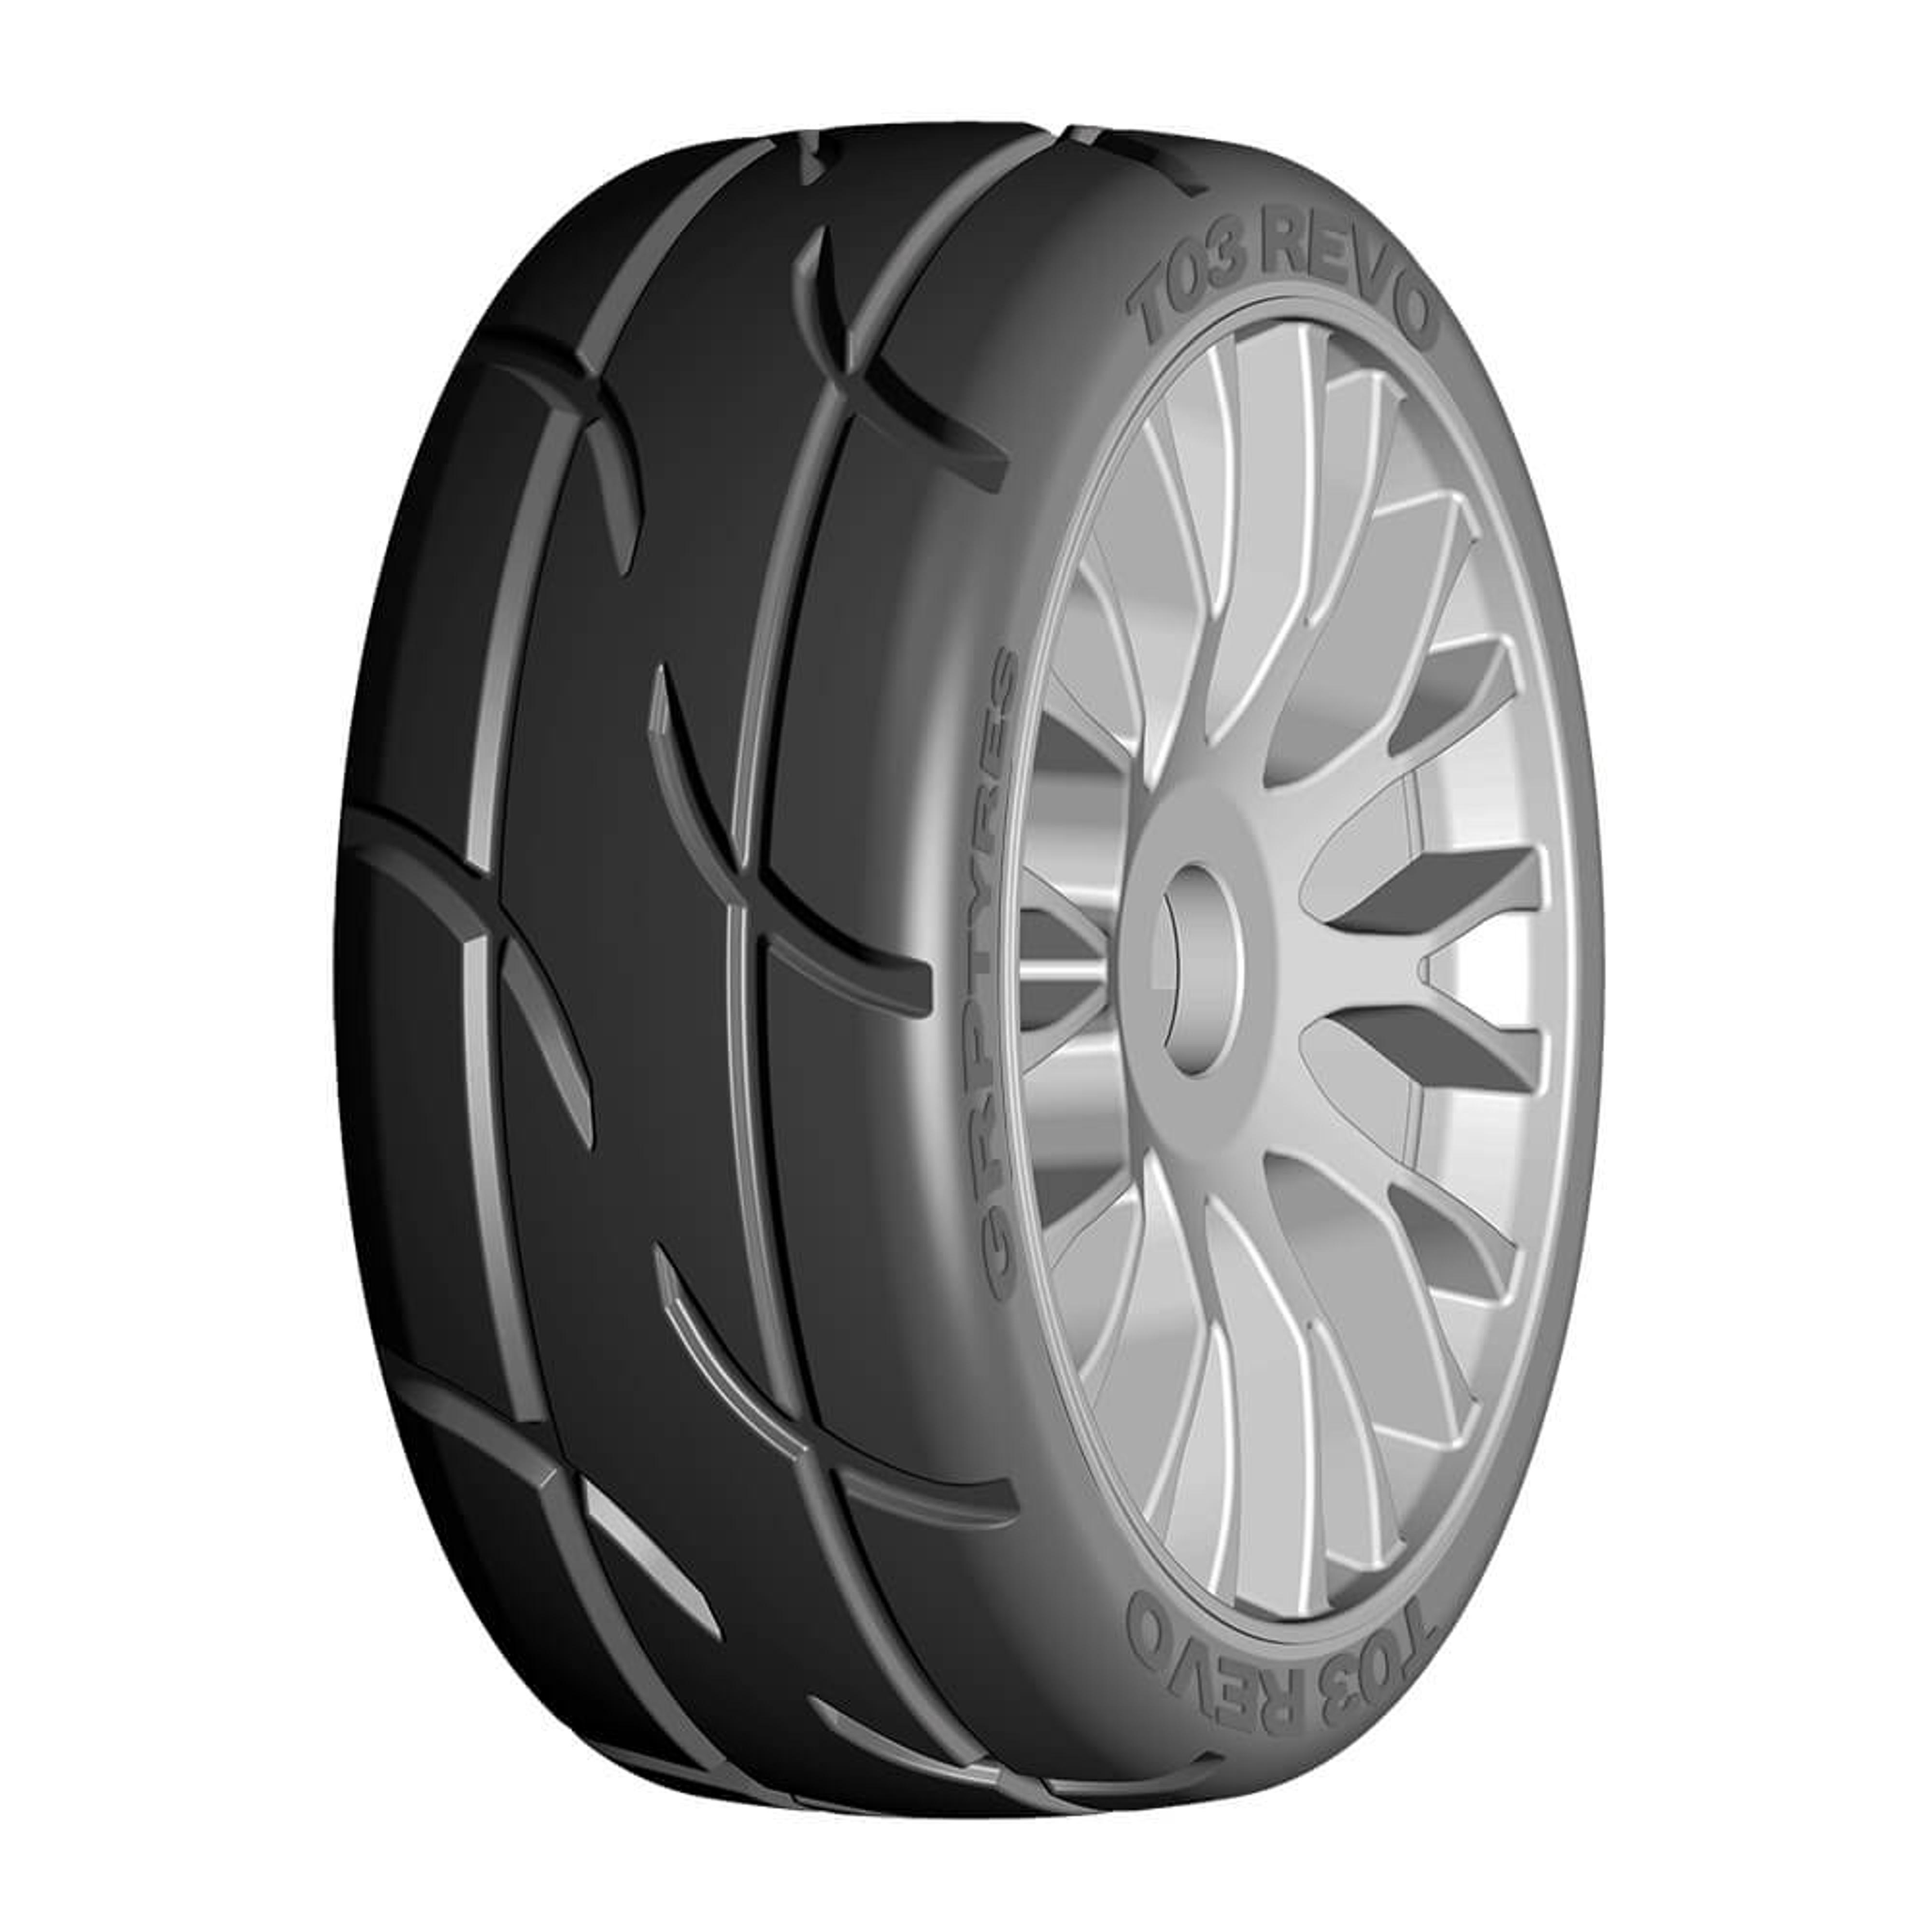 1/8 GT T03 REVO XB3 Soft Tyres, 20 Spoked FLEX Silver Wheels (1 pair)